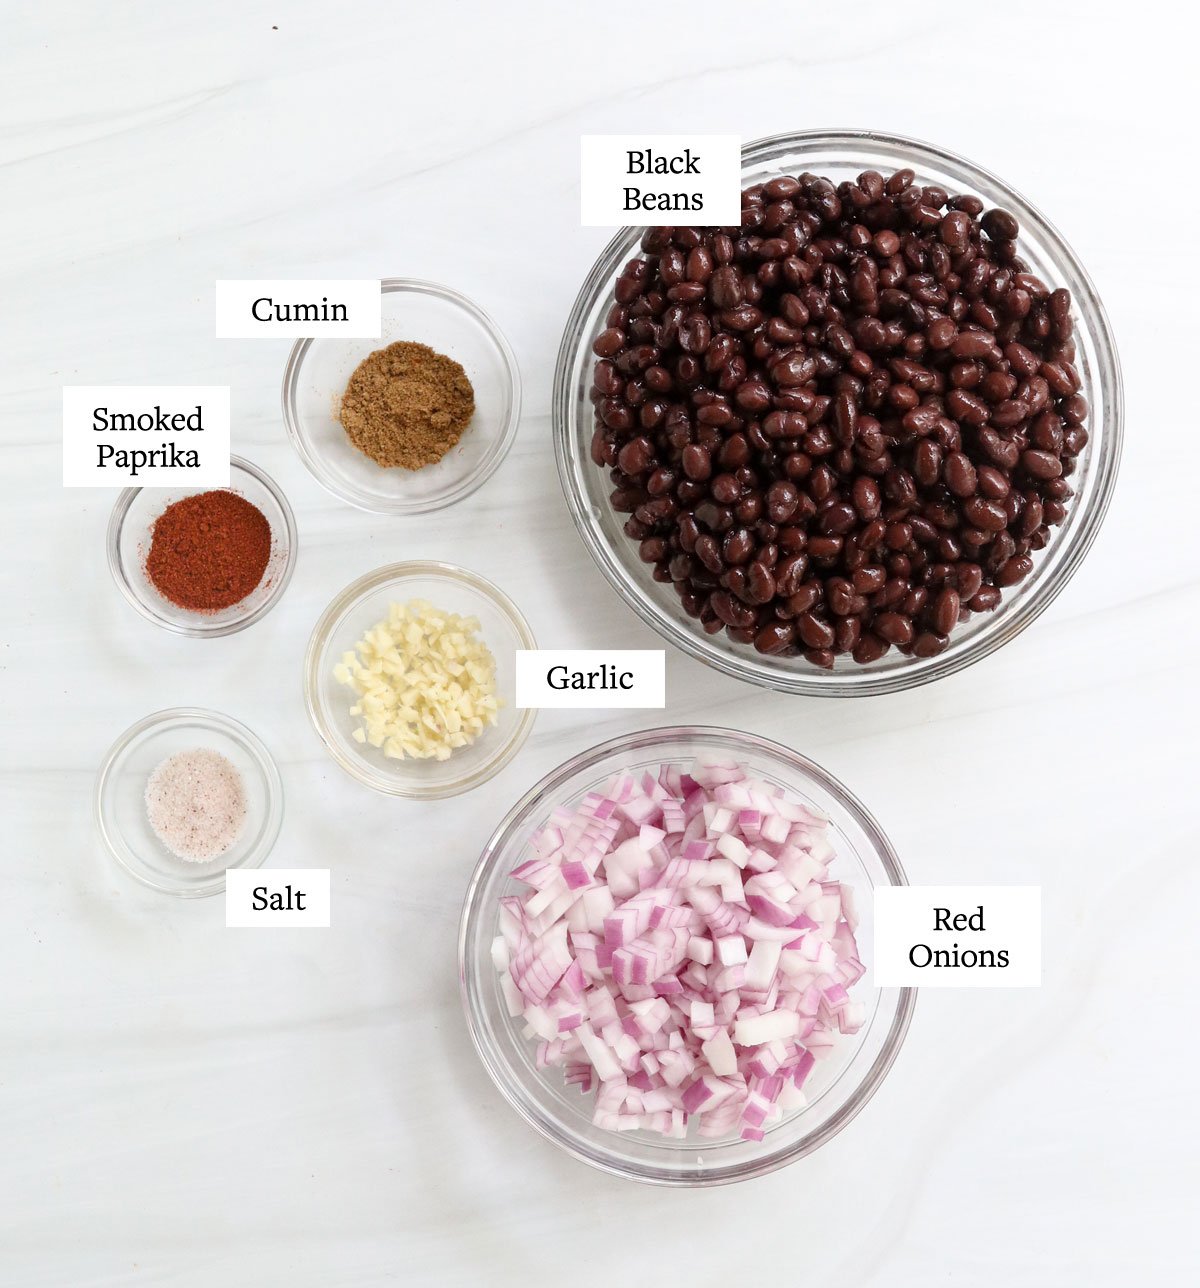 black bean ingredients in glass bowls.